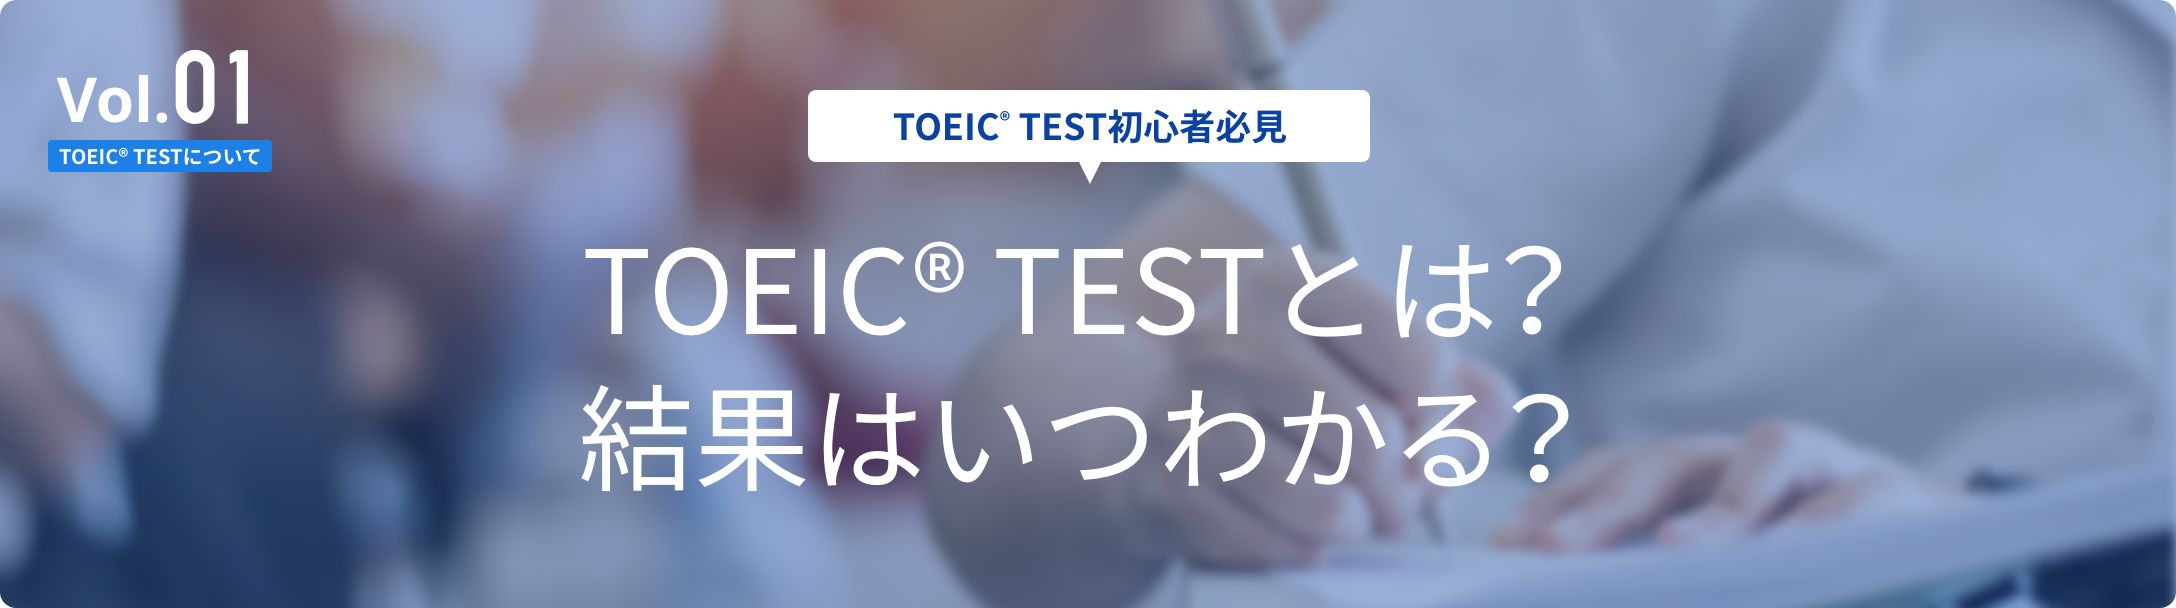 Vol.01[TOEIC®TESTについて]【TOEIC® TEST初心者必見】TOEIC® TESTとは? 結果はいつわかる?